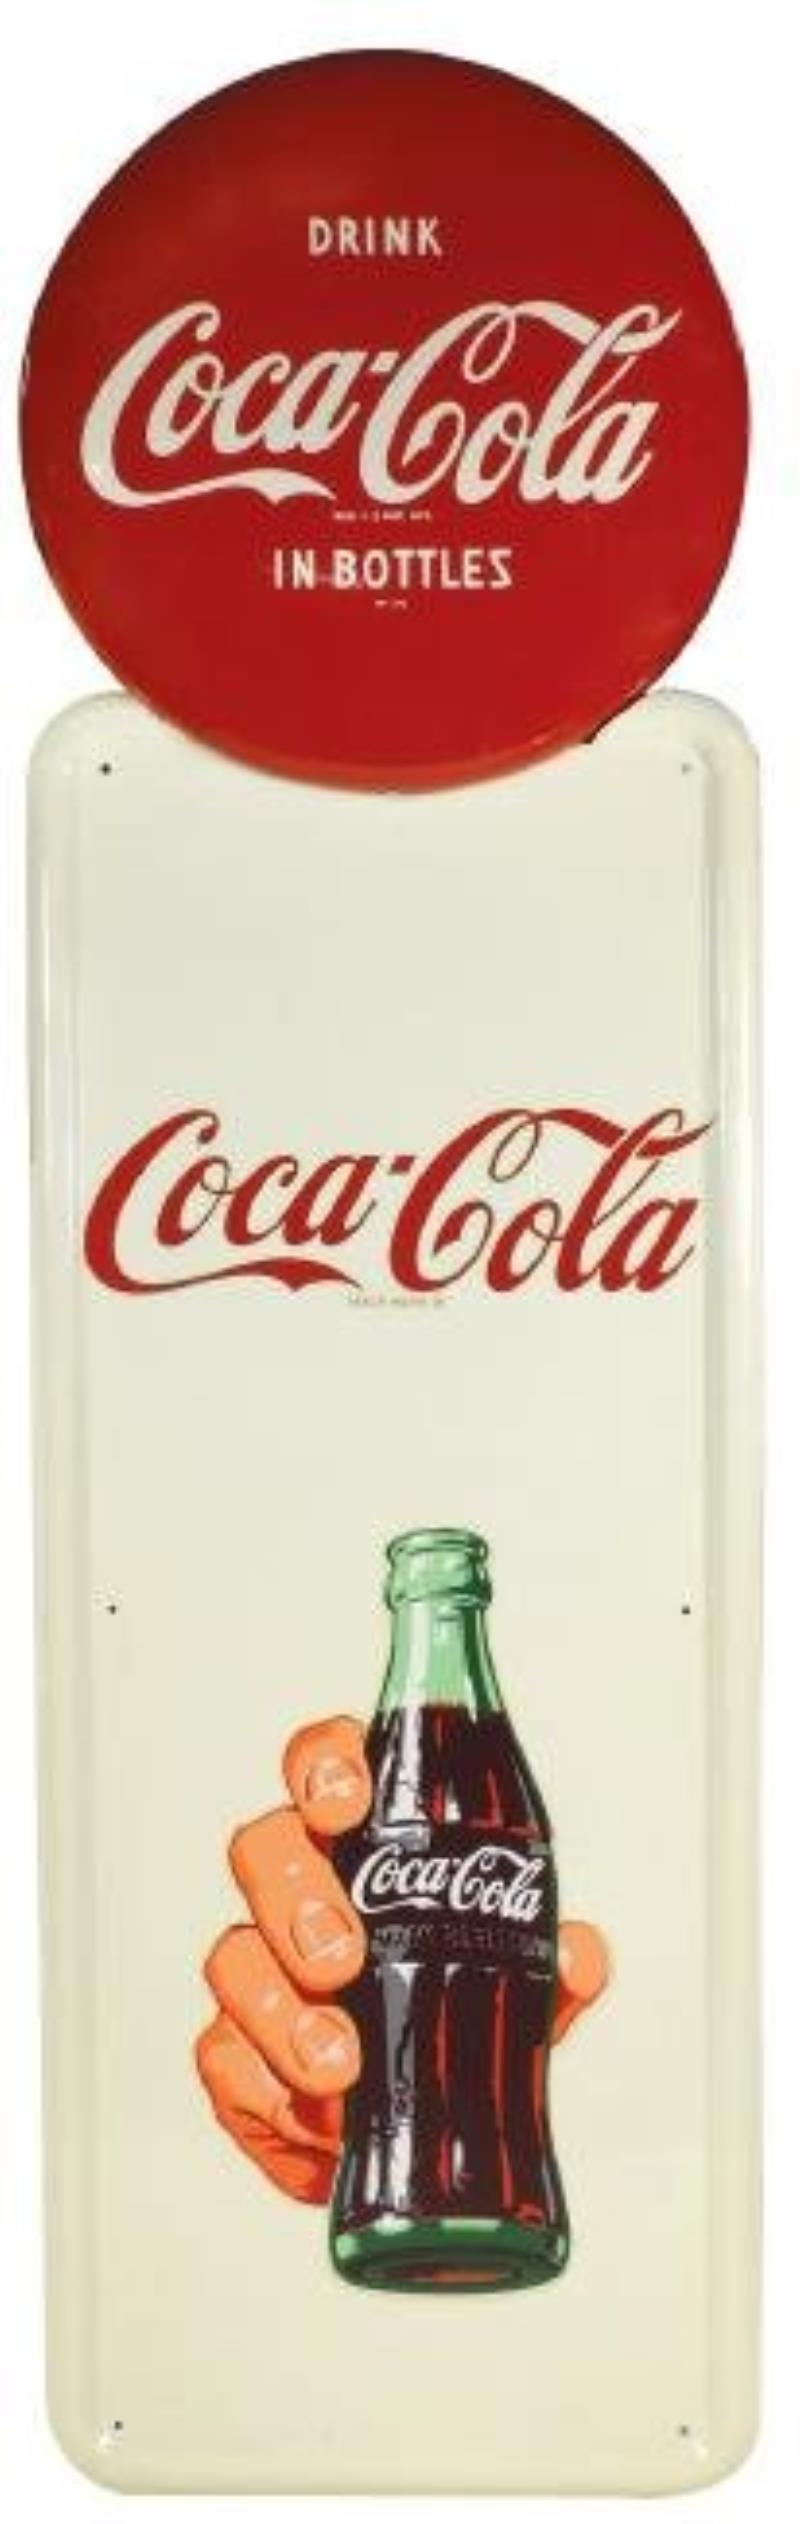 Coca-Cola sign, "Drink Coca-Cola in Bottles" button top